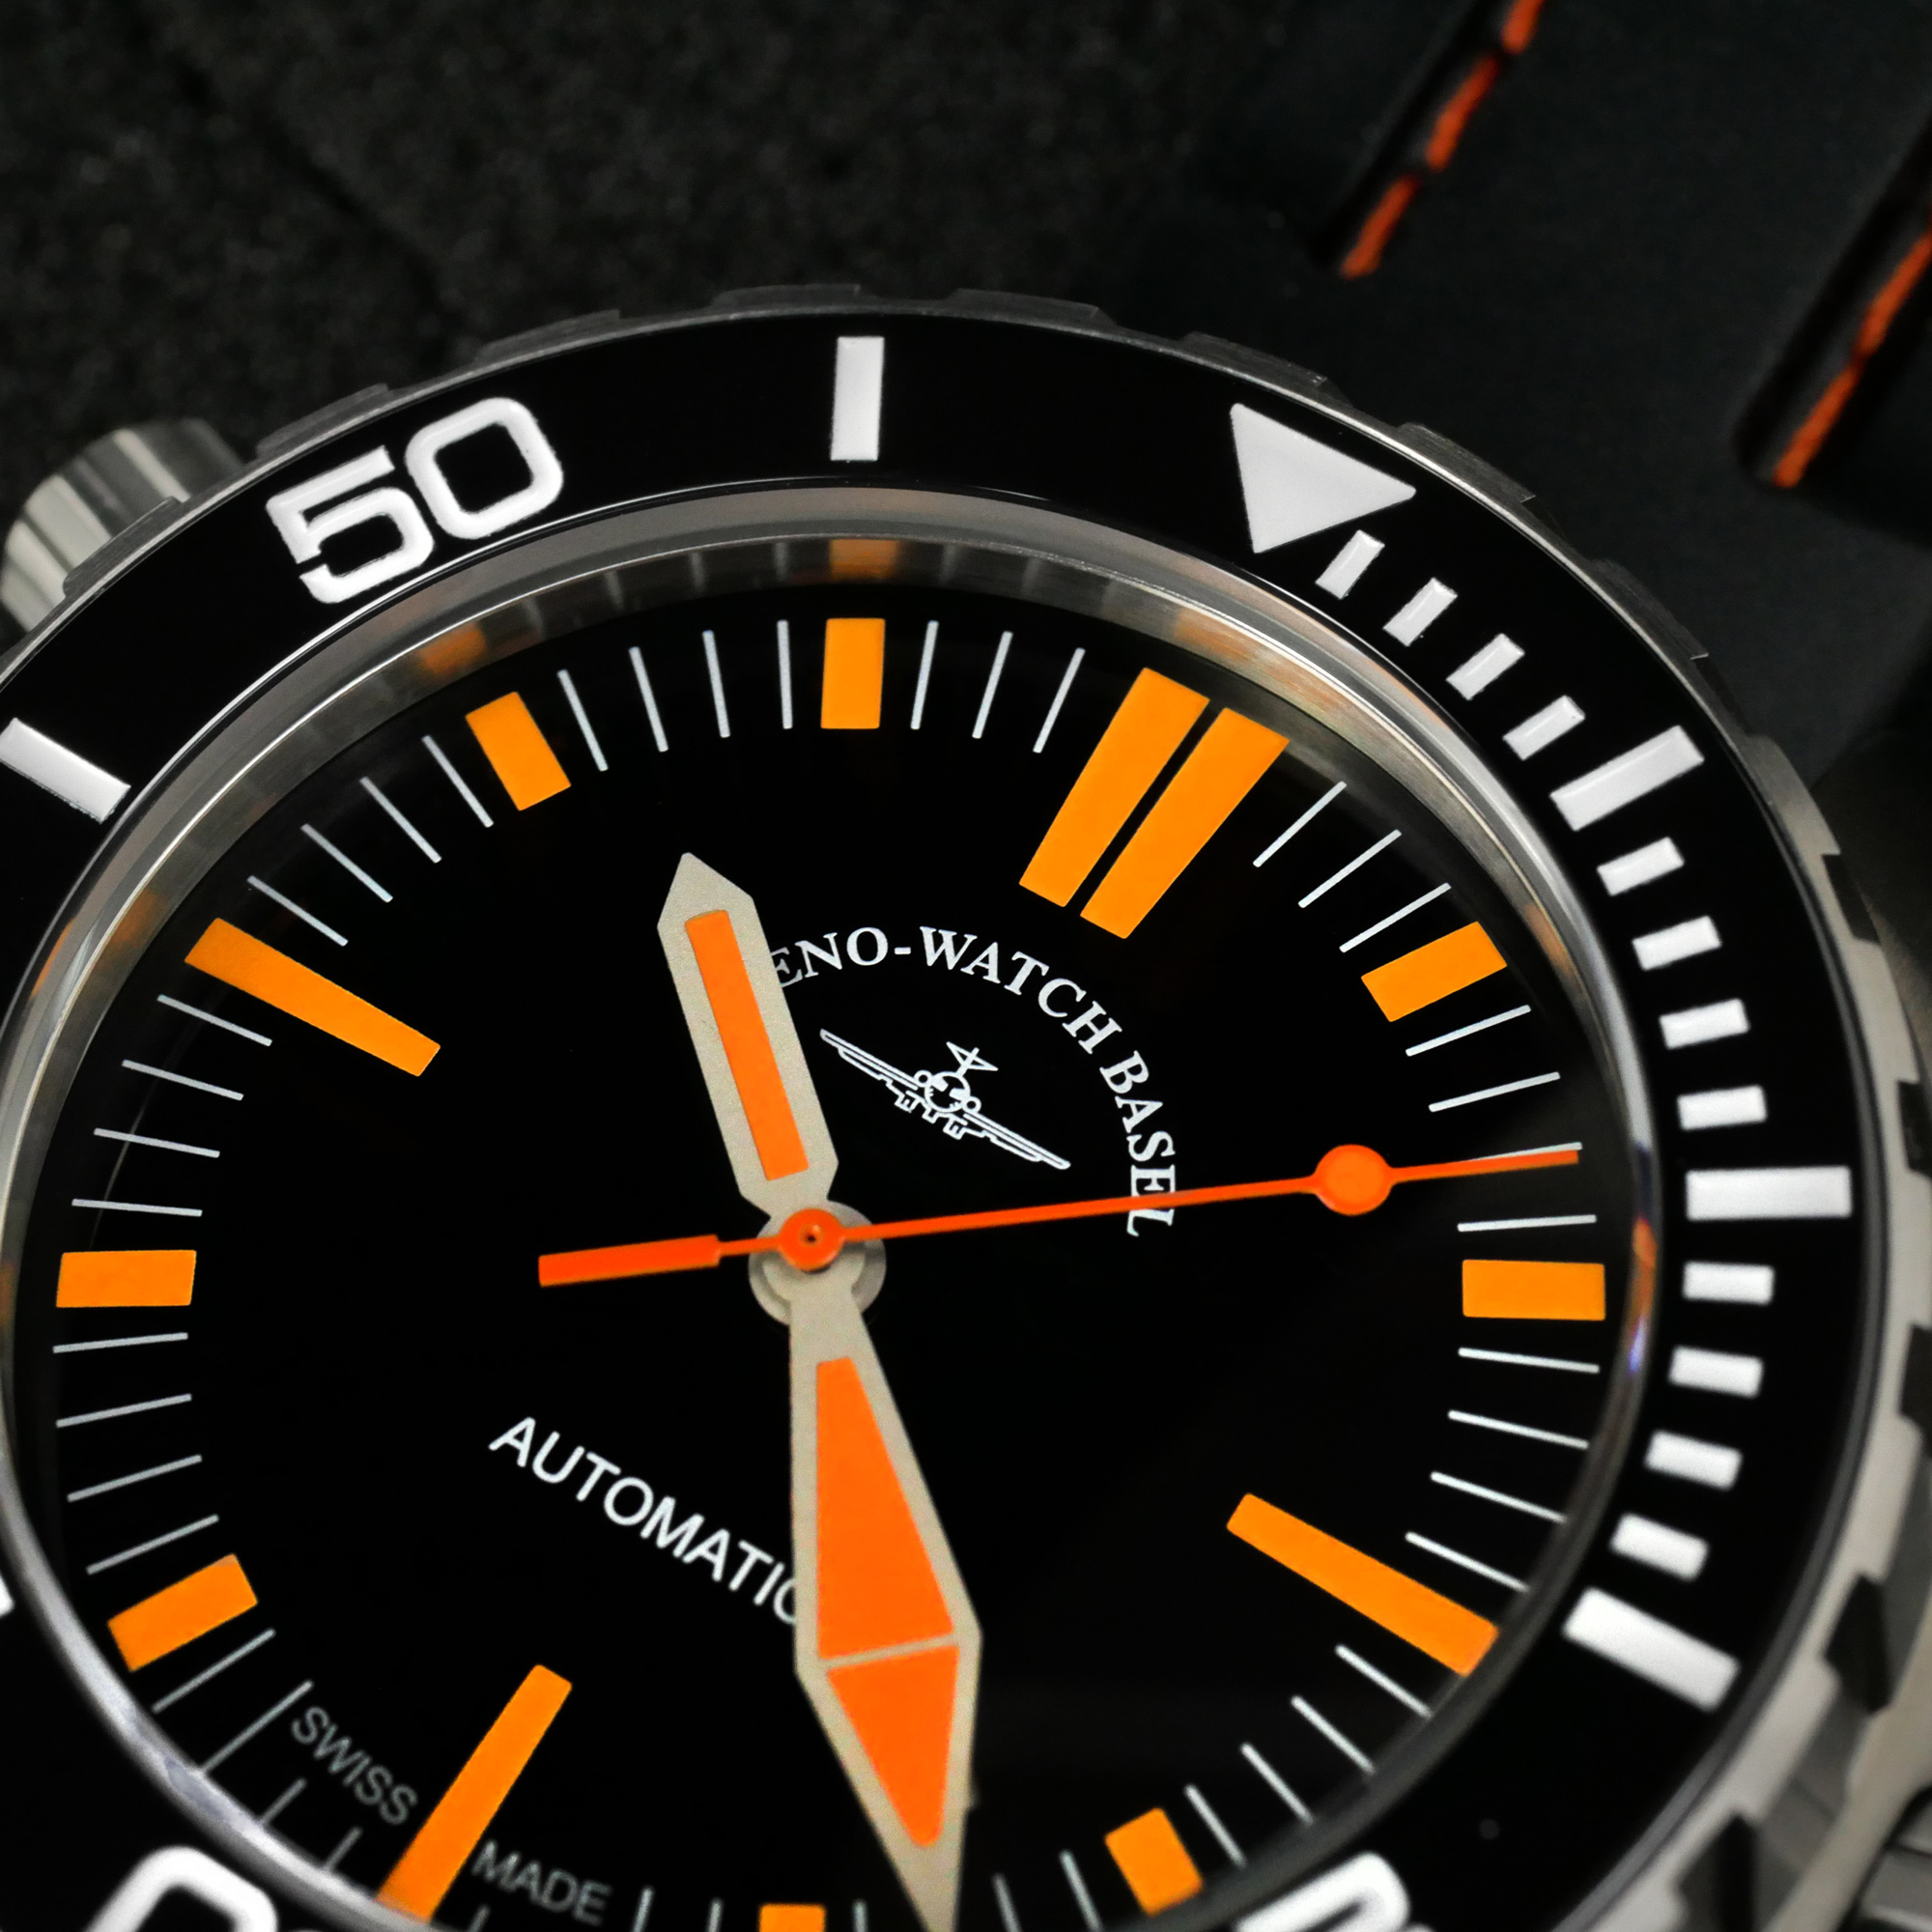 Zeno-Watch Basel Professional Diver Pro Diver 2 Swiss Men's Watch 48mm 50ATM 6603-2824-a15